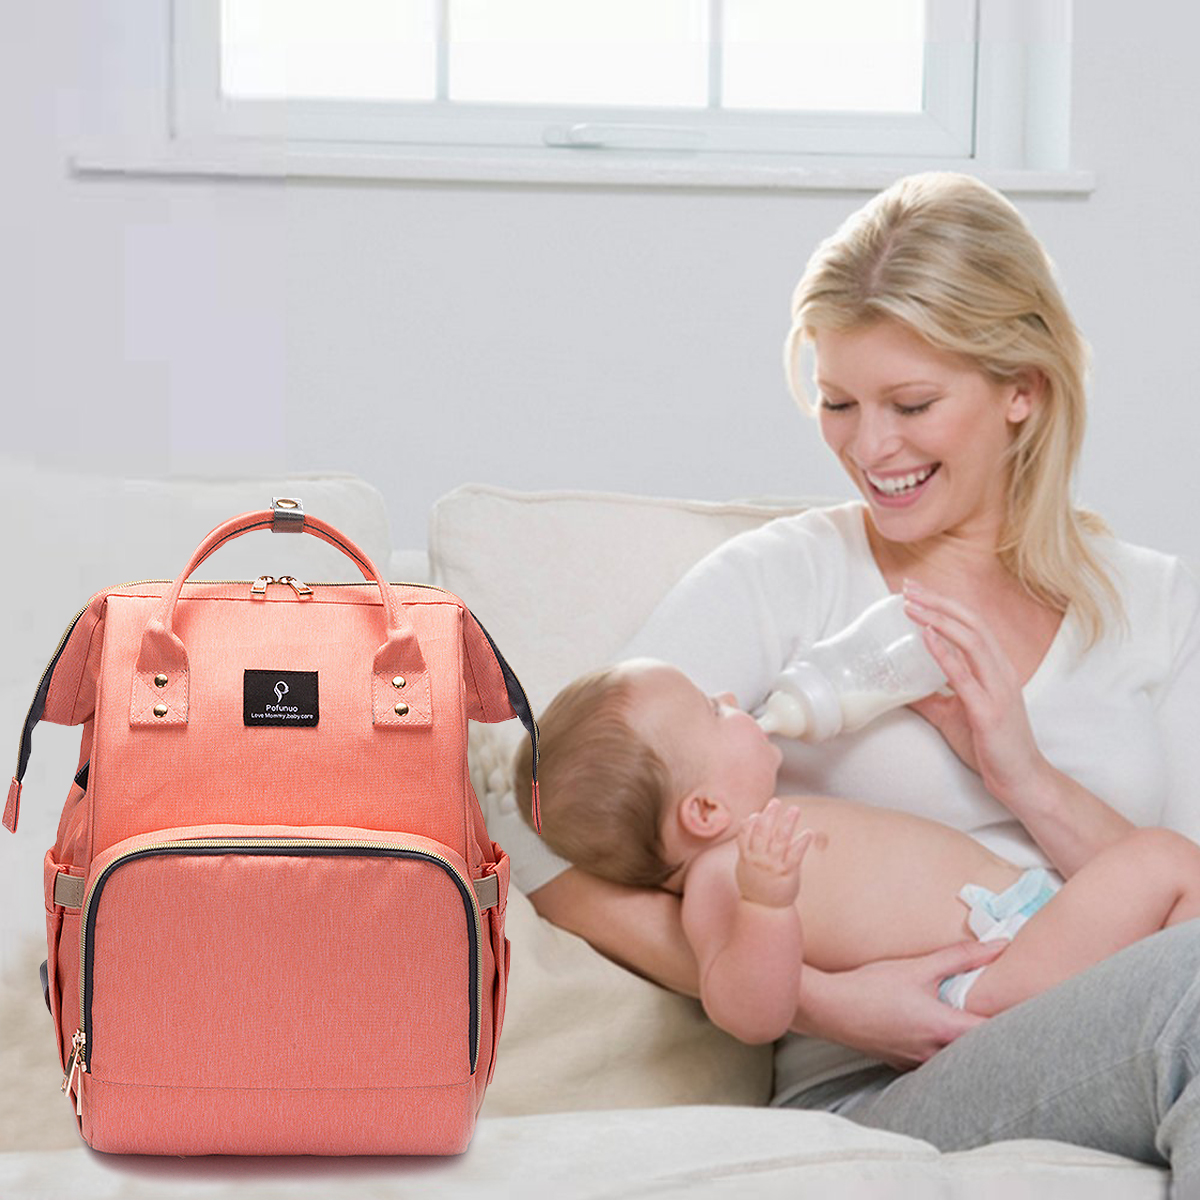 Pofunuo-Waterproof-Mummy-Baby-Diaper-Backpack-with-USB-Interface-Charging-Waterproof-Oxford-Diaper-N-1245692-9